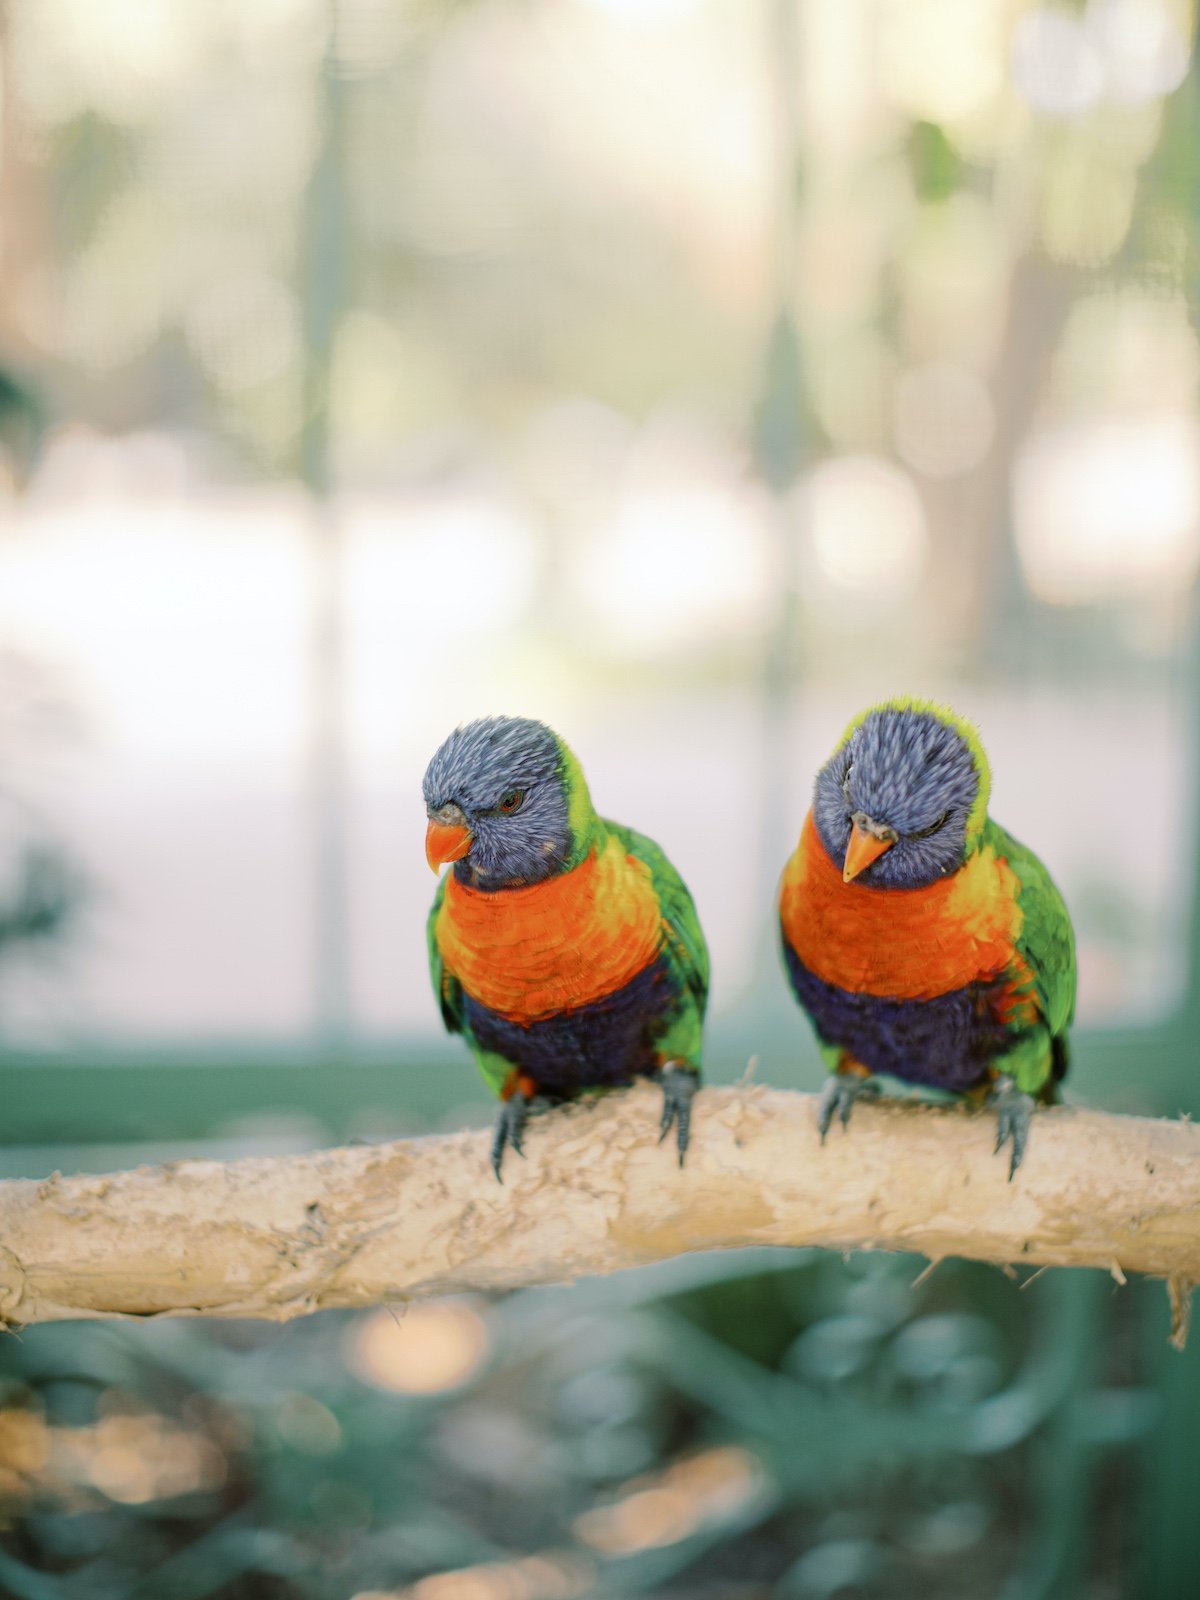 Everglades Wonder Garden styled with rainbow parrots